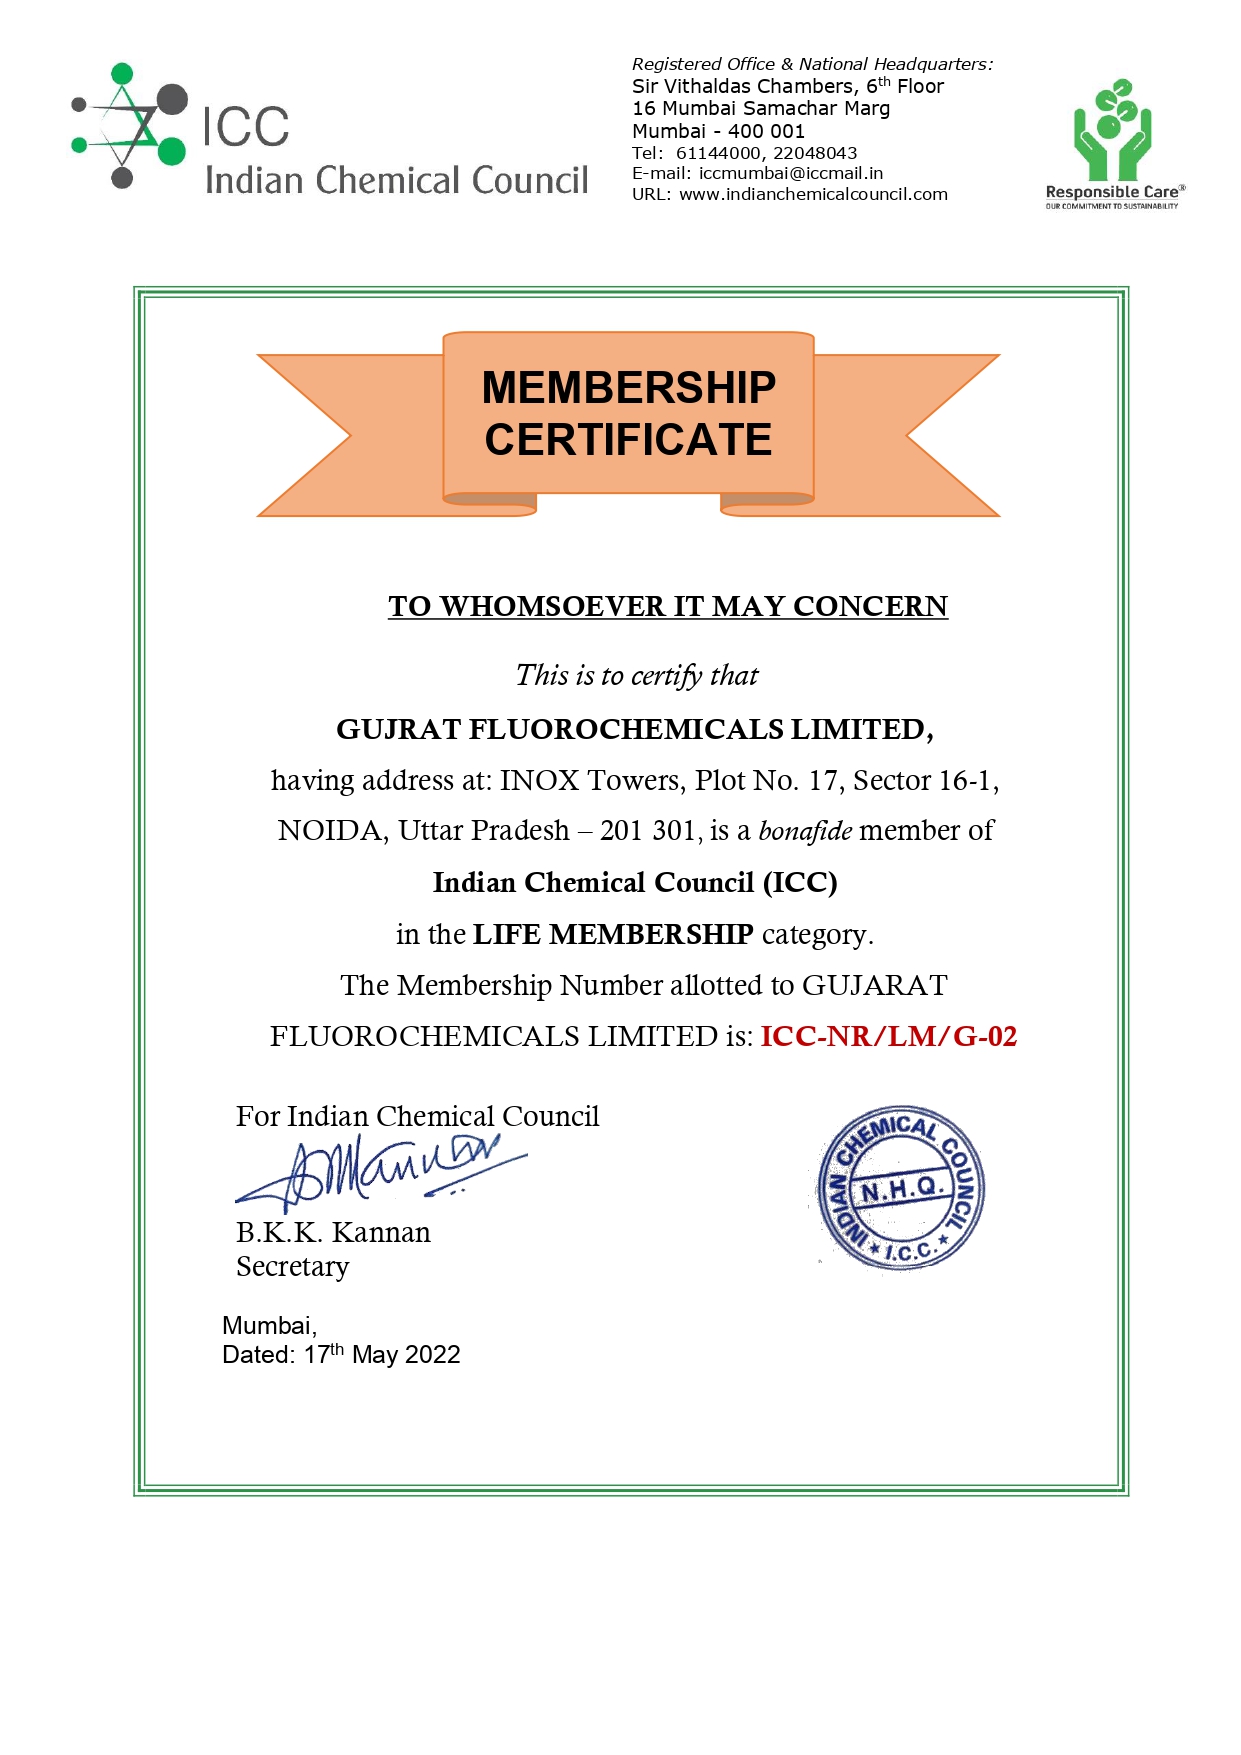 GFL Registration certificate